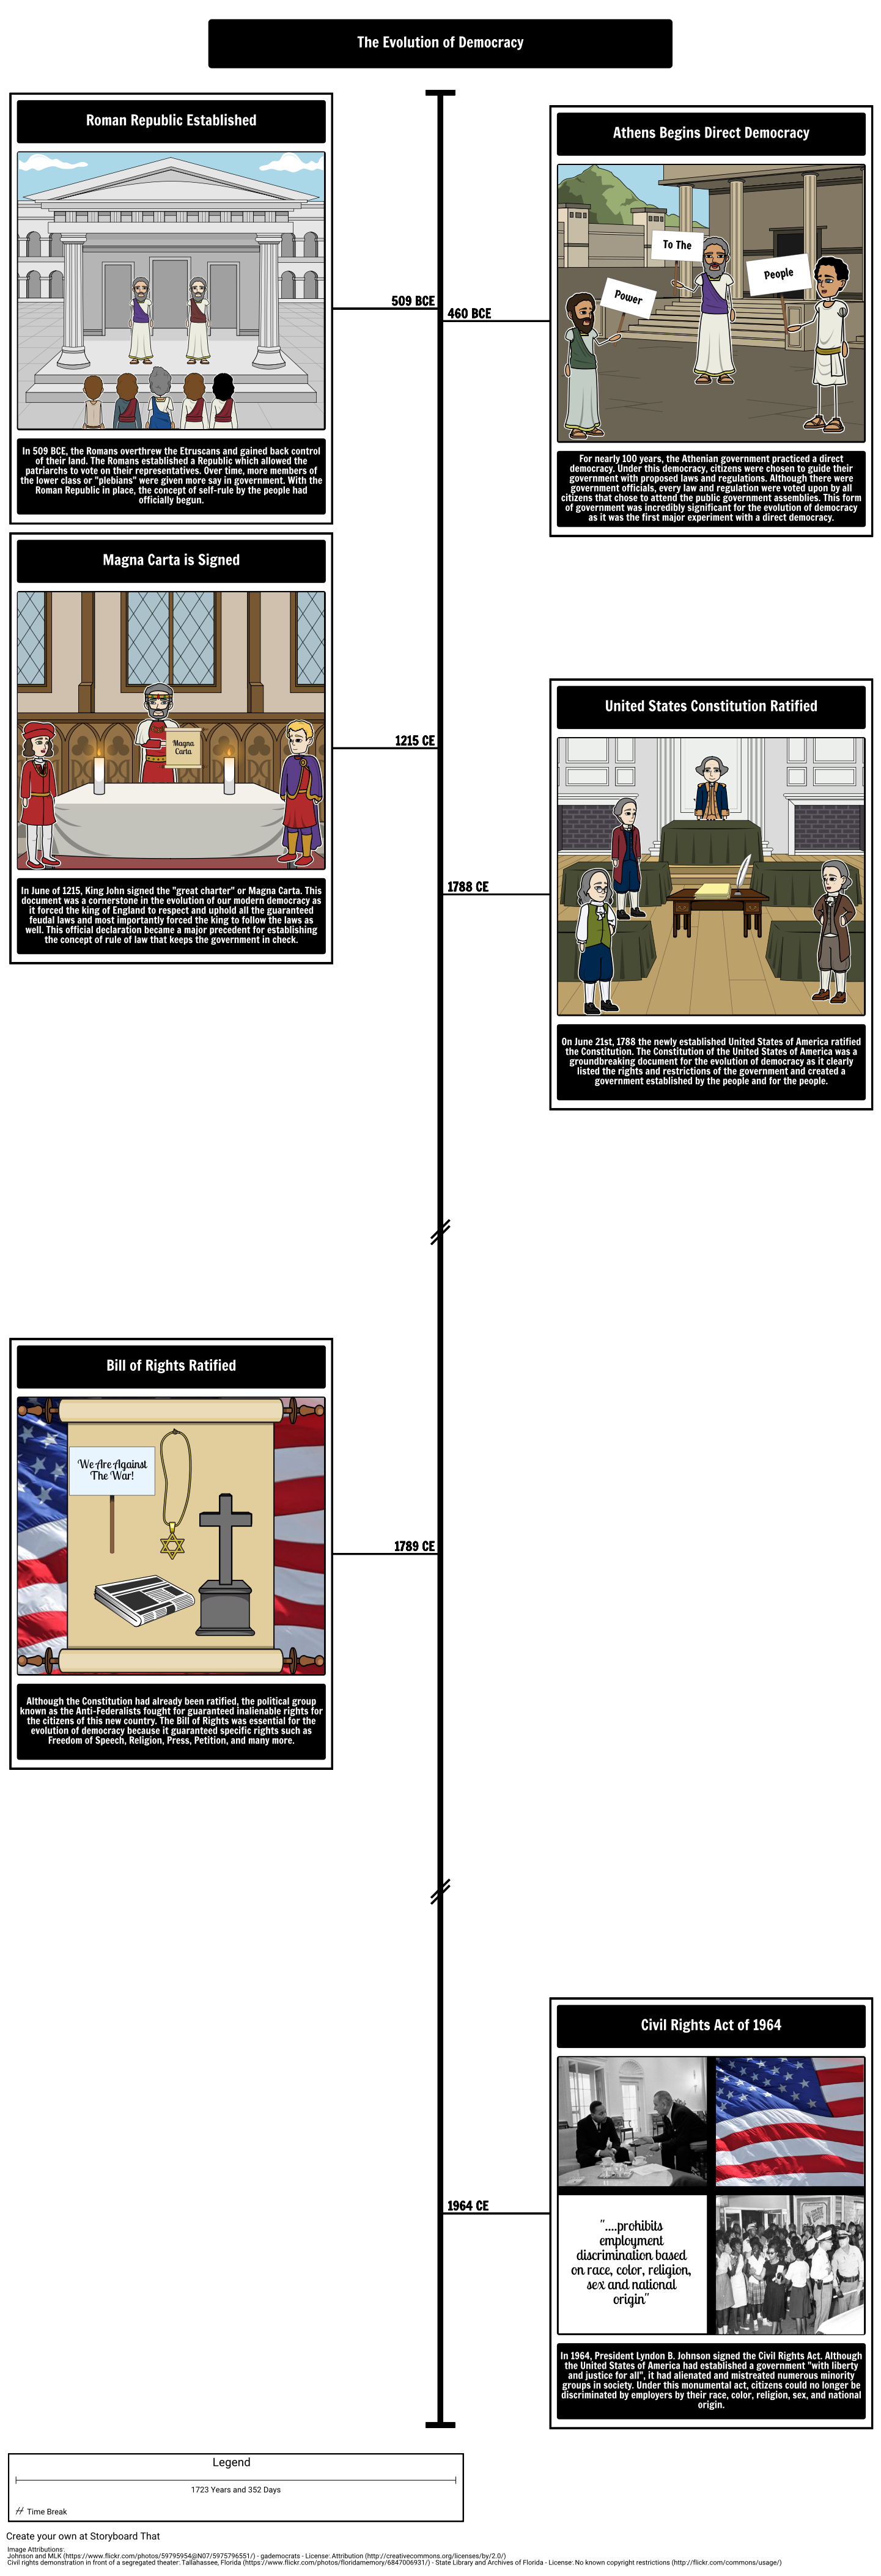 Timeline of The Evolution of Democracy Storyboard